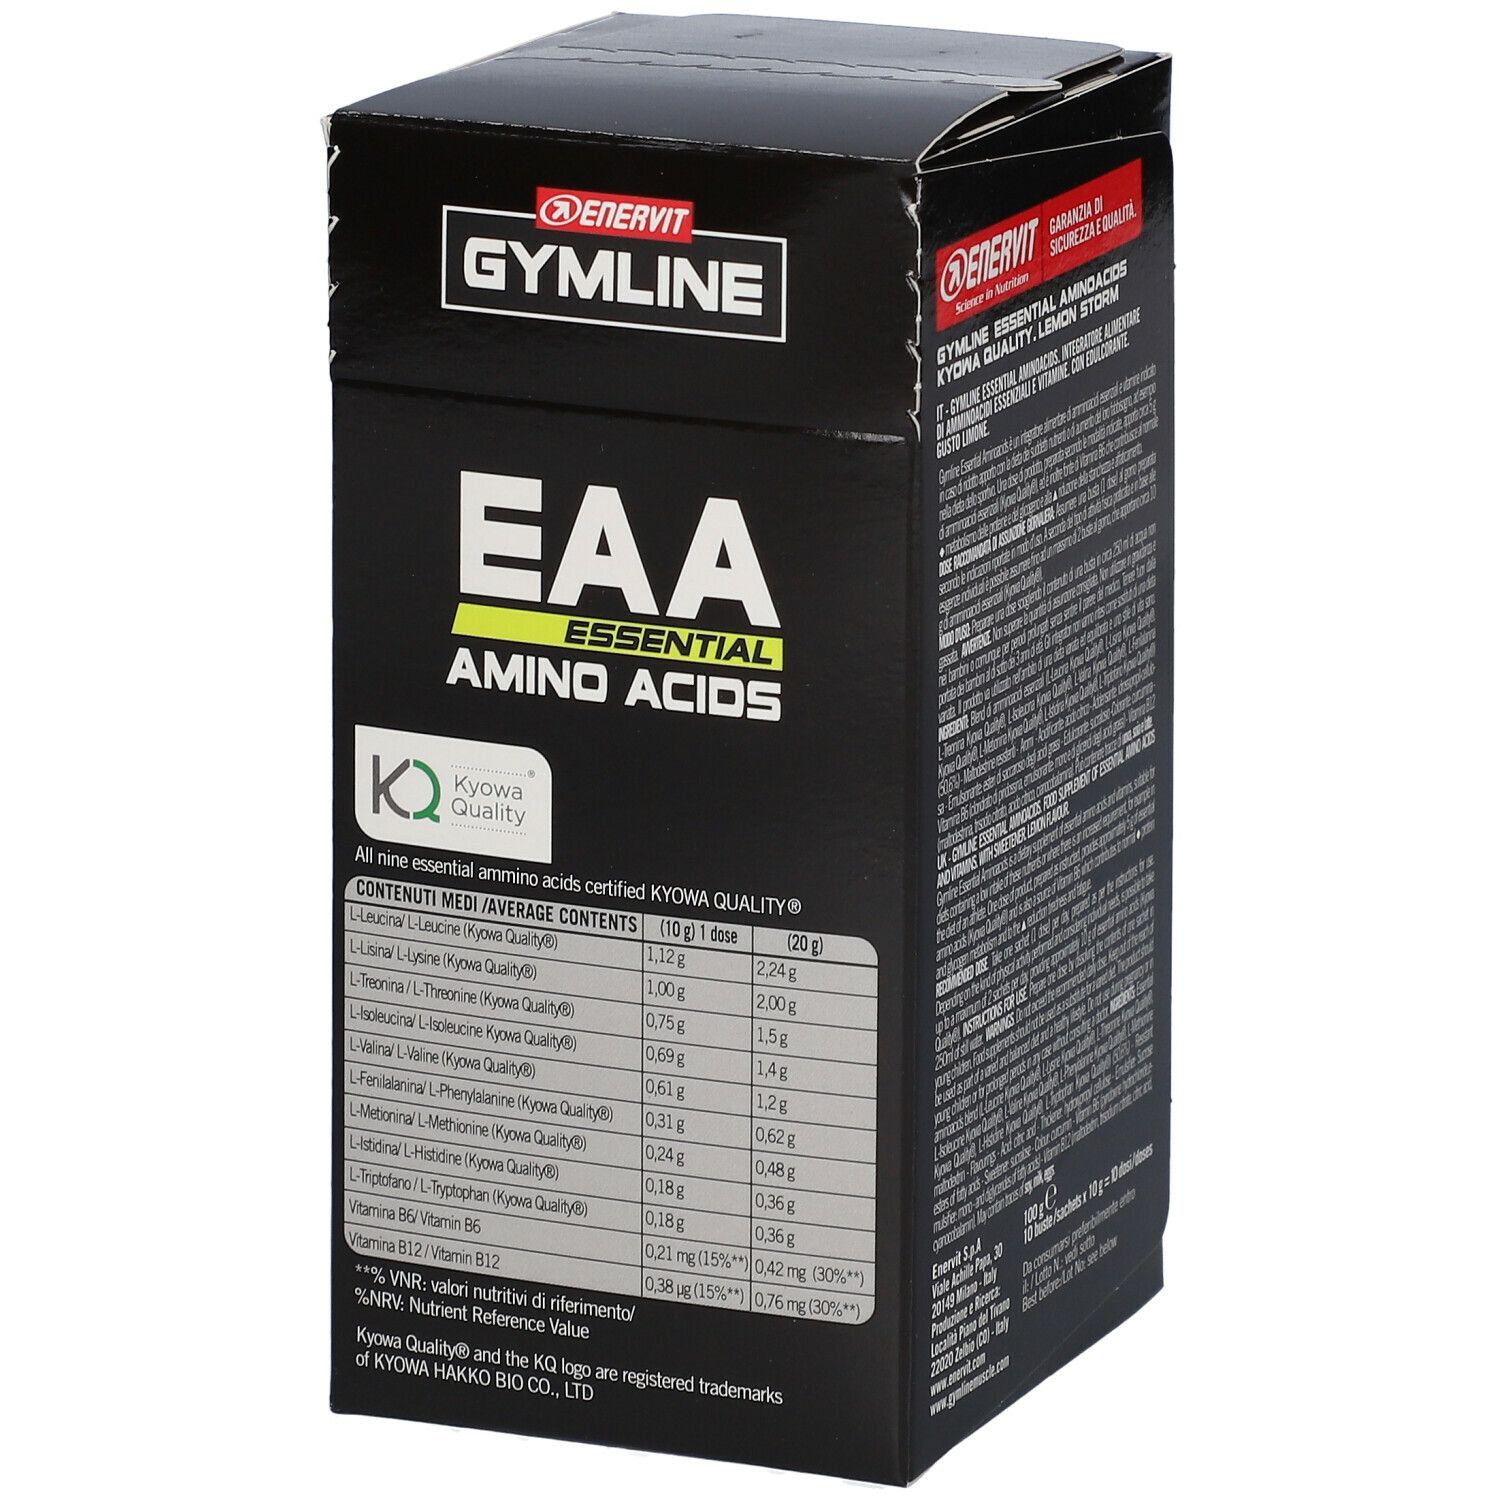 ENERVIT® Gymline EAA Essential Amino Acids